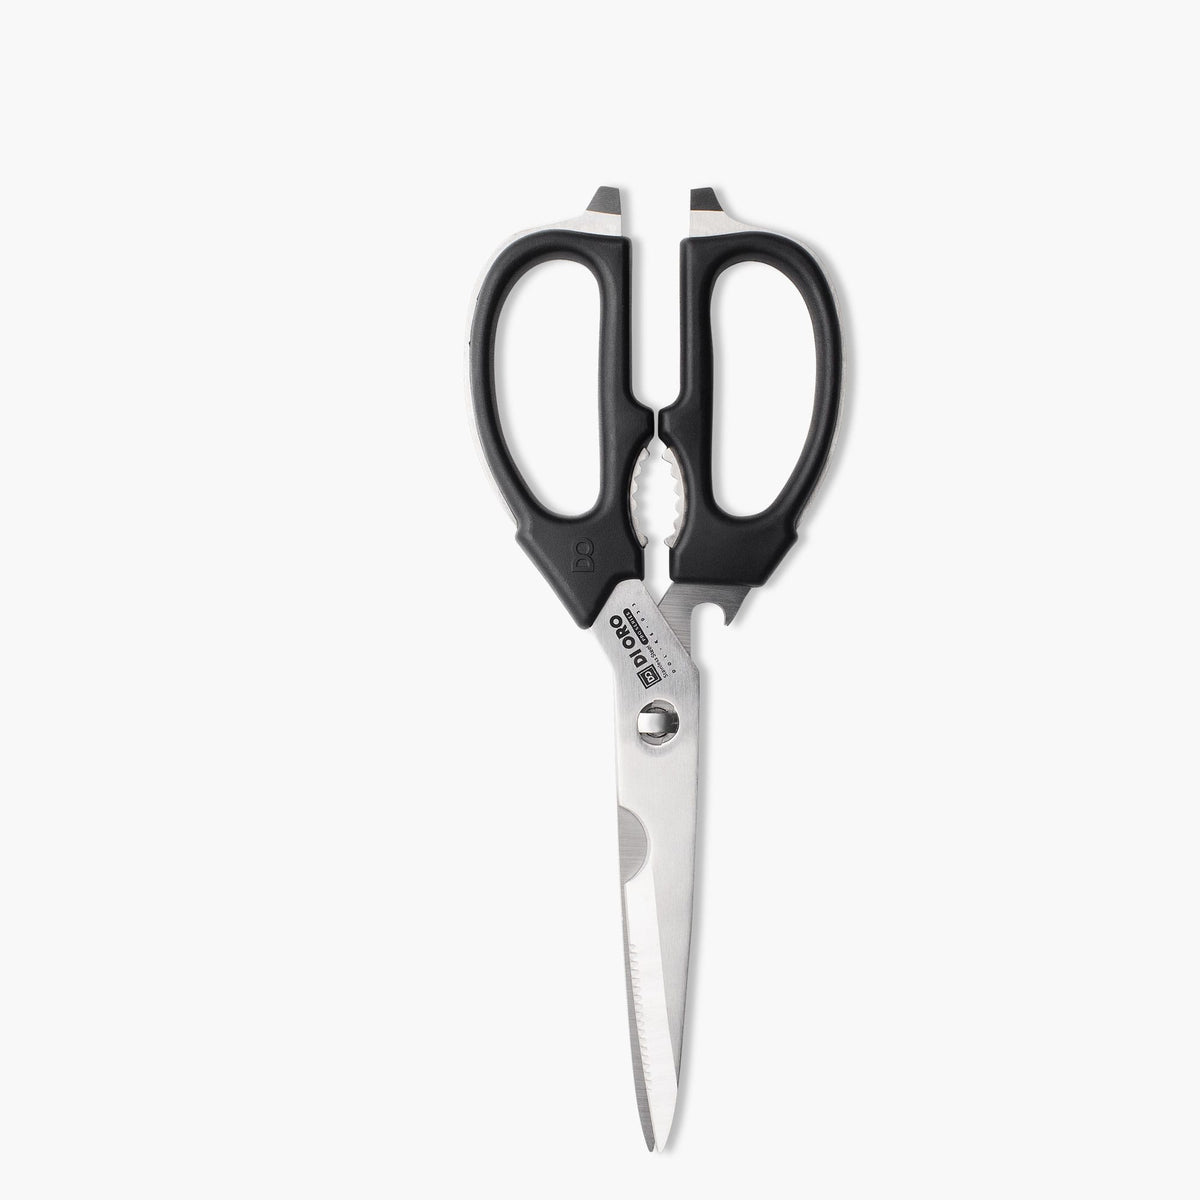 DI ORO Multi-Purpose High-Carbon Stainless Steel Kitchen Scissors